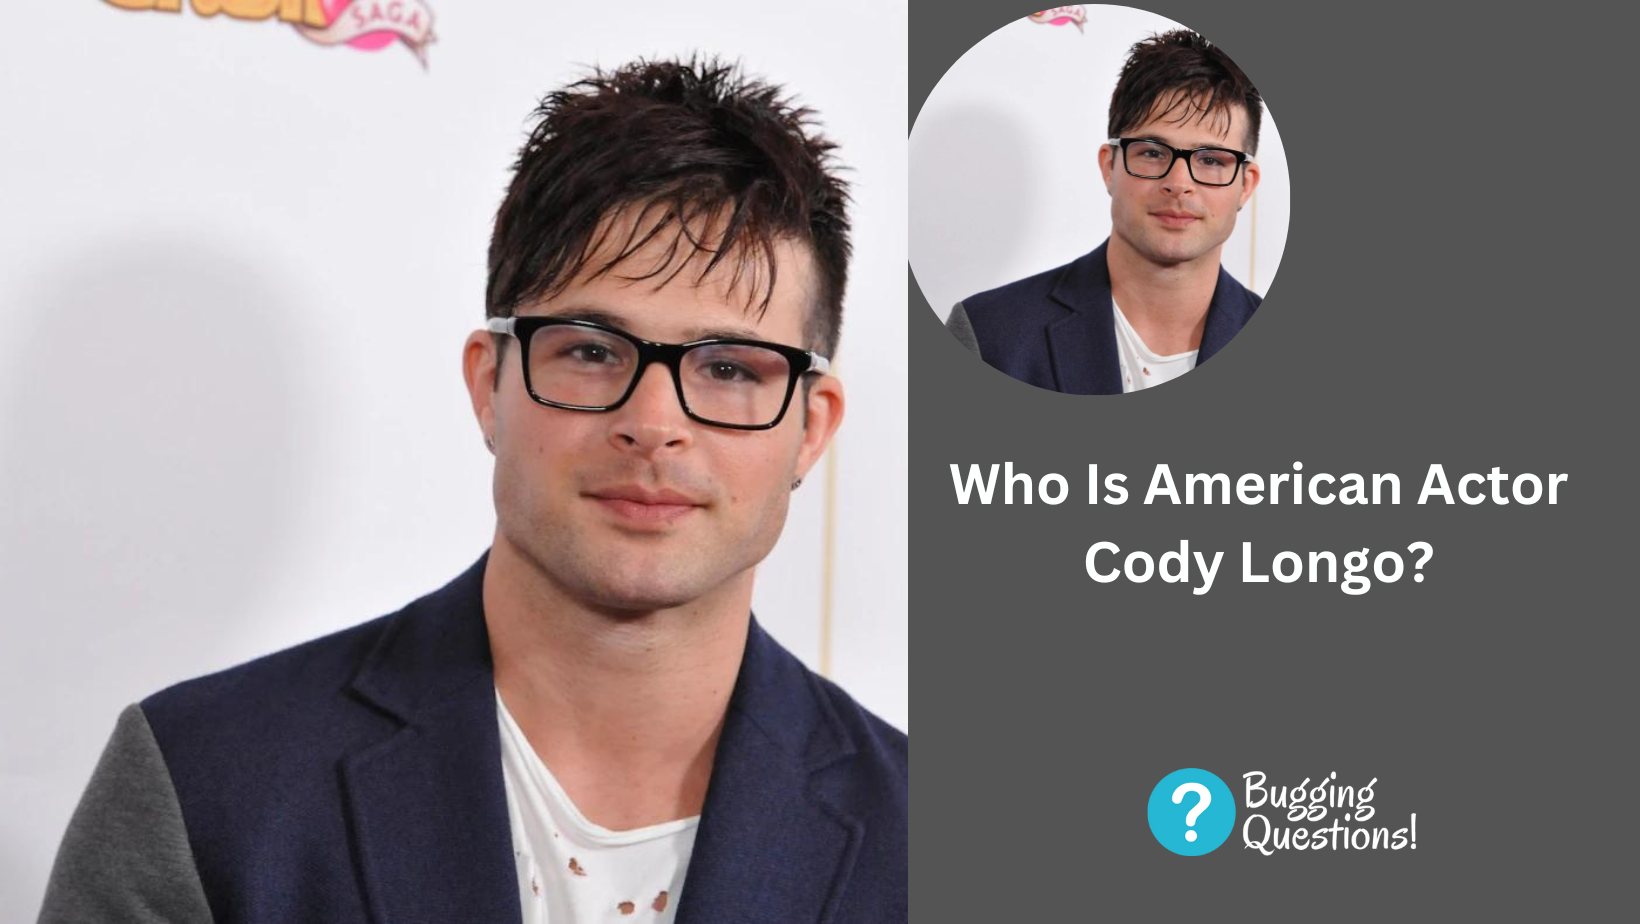 Who Is American Actor Cody Longo?